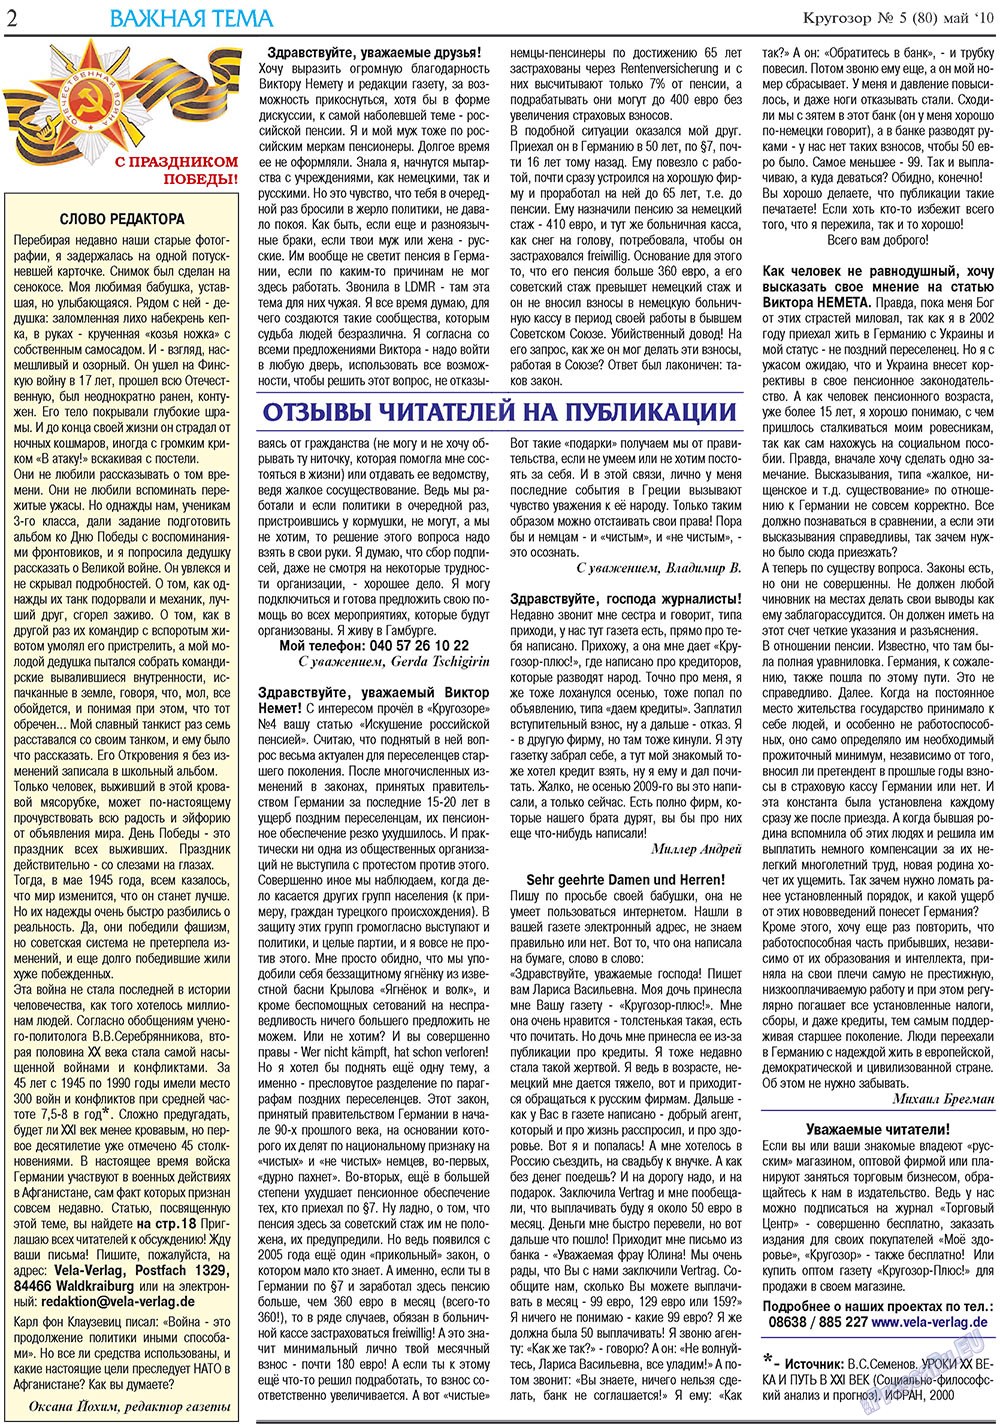 Кругозор плюс! (газета). 2010 год, номер 5, стр. 2